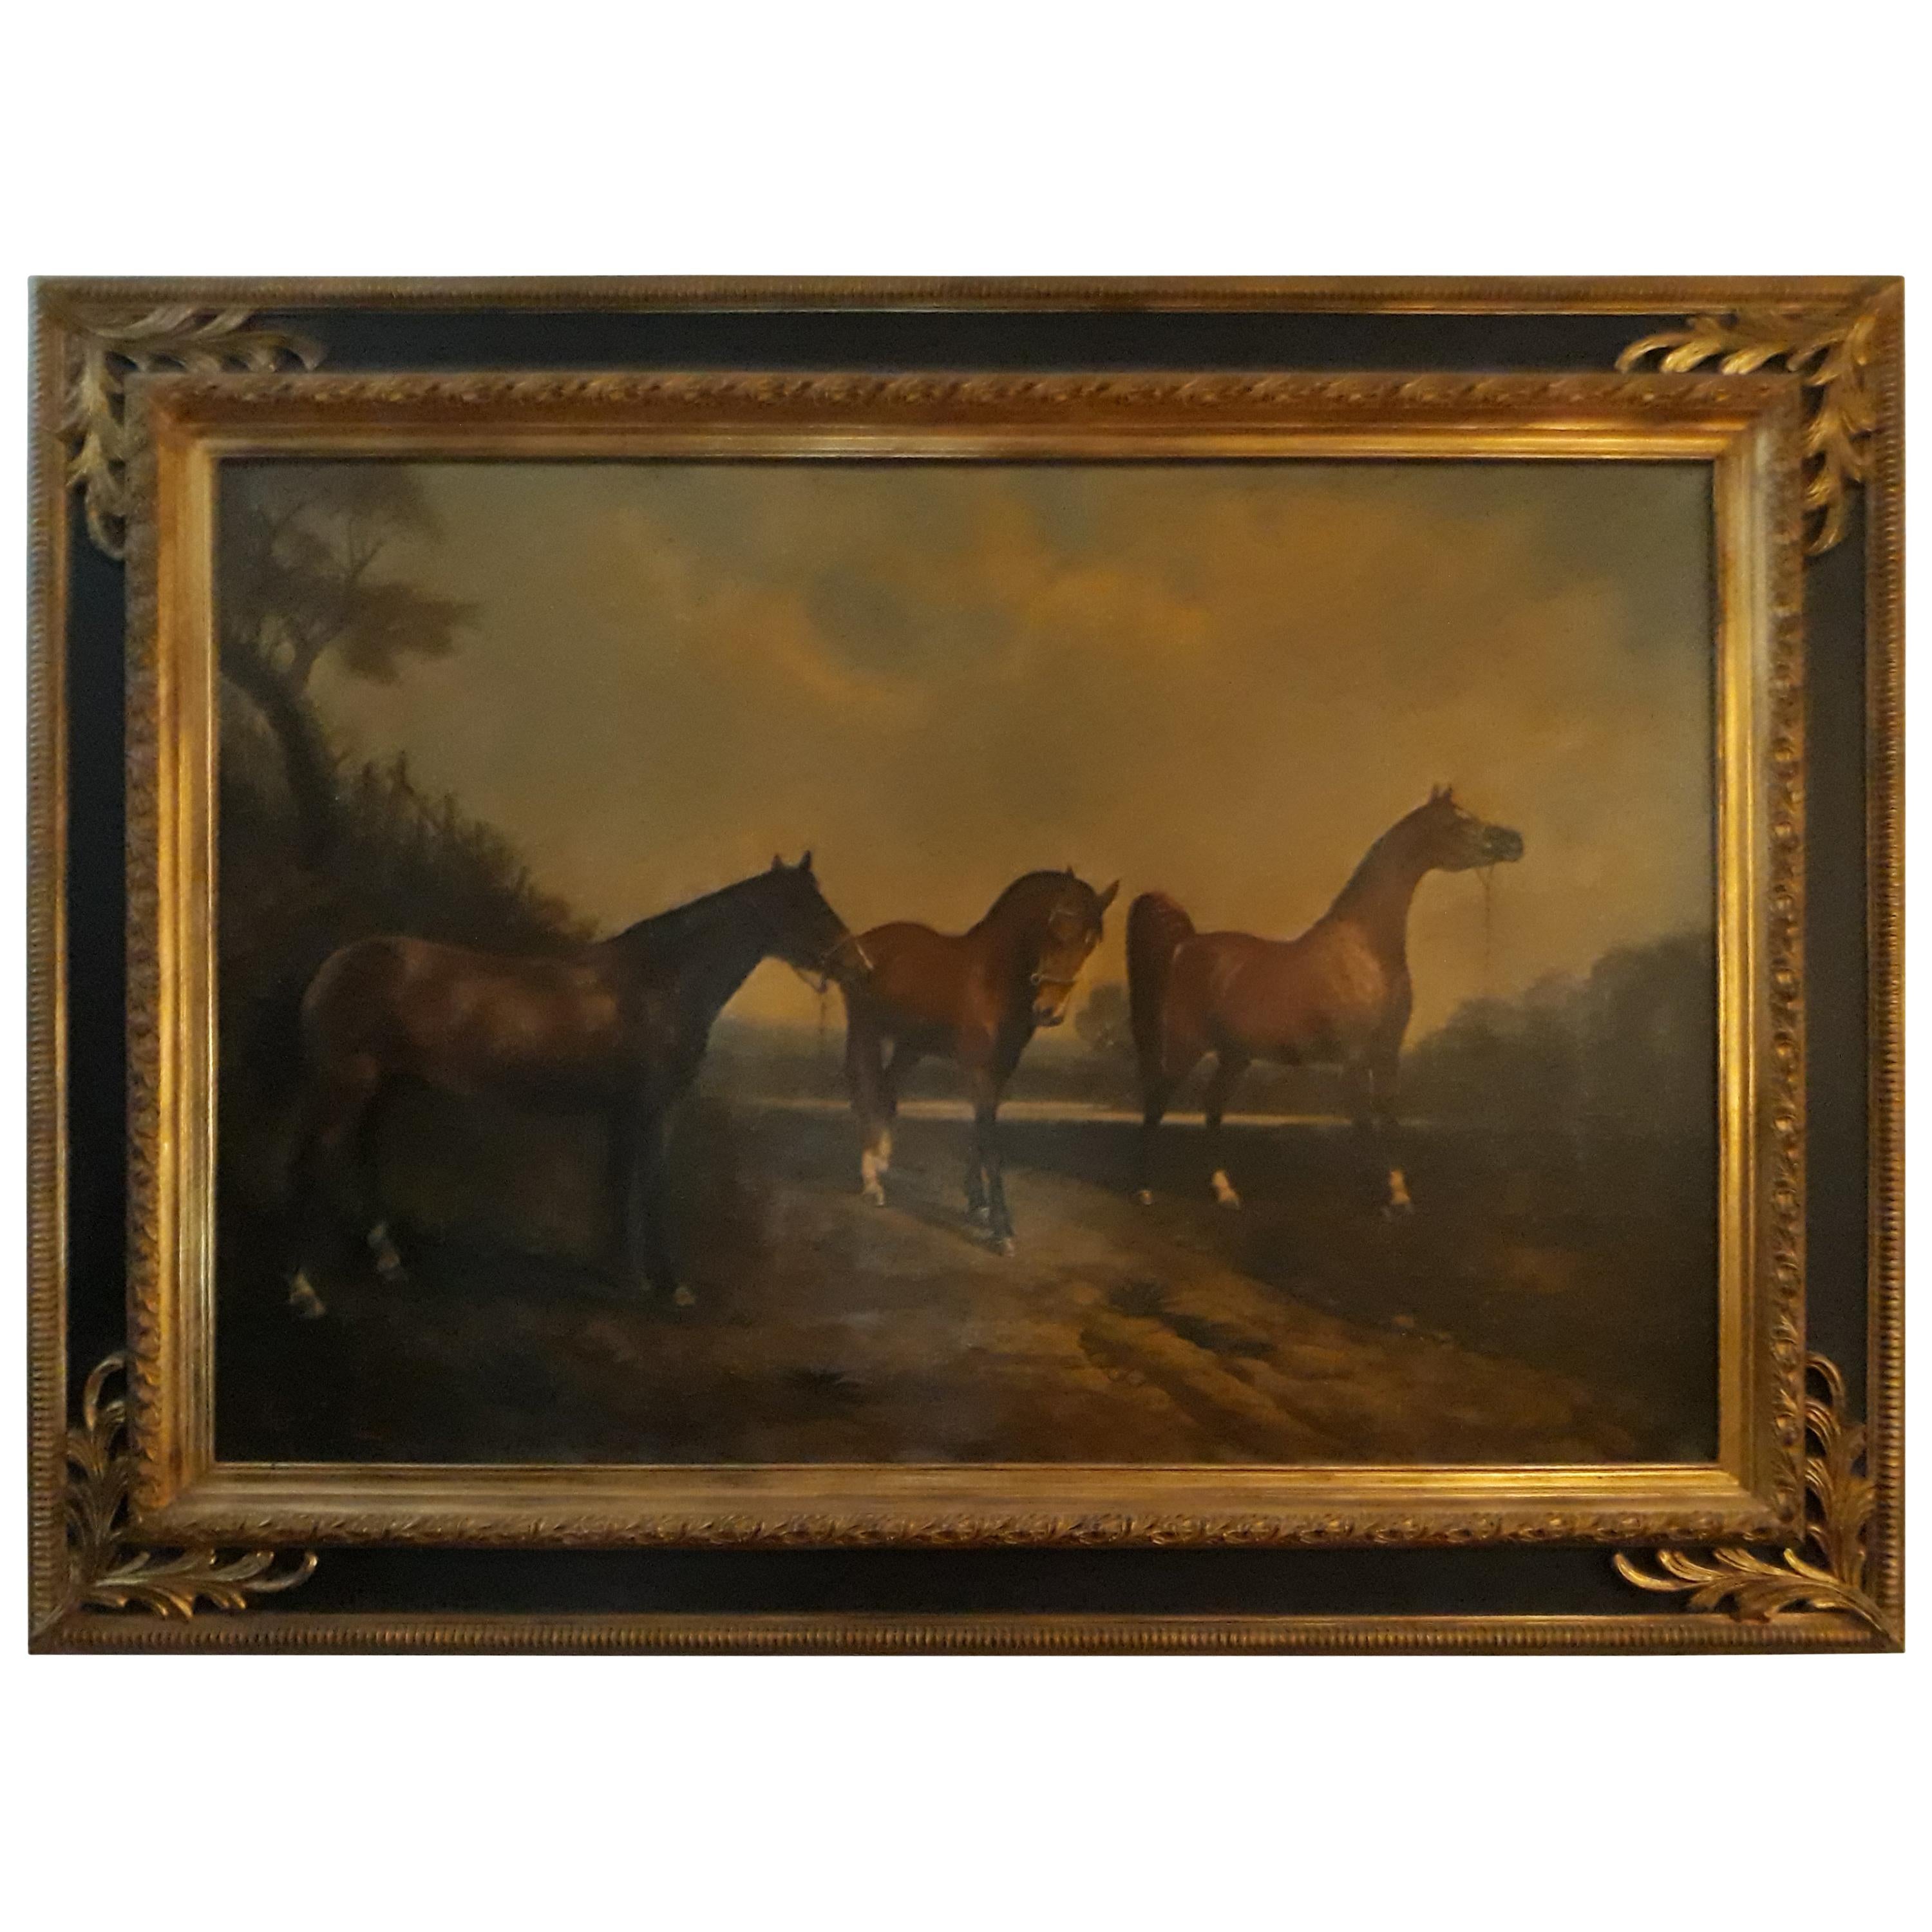 Mark Mayer impressive oil on canvas, 20th century, horse scene
Size: Width 150 cm, height 110 cm, depth 7 cm.
 